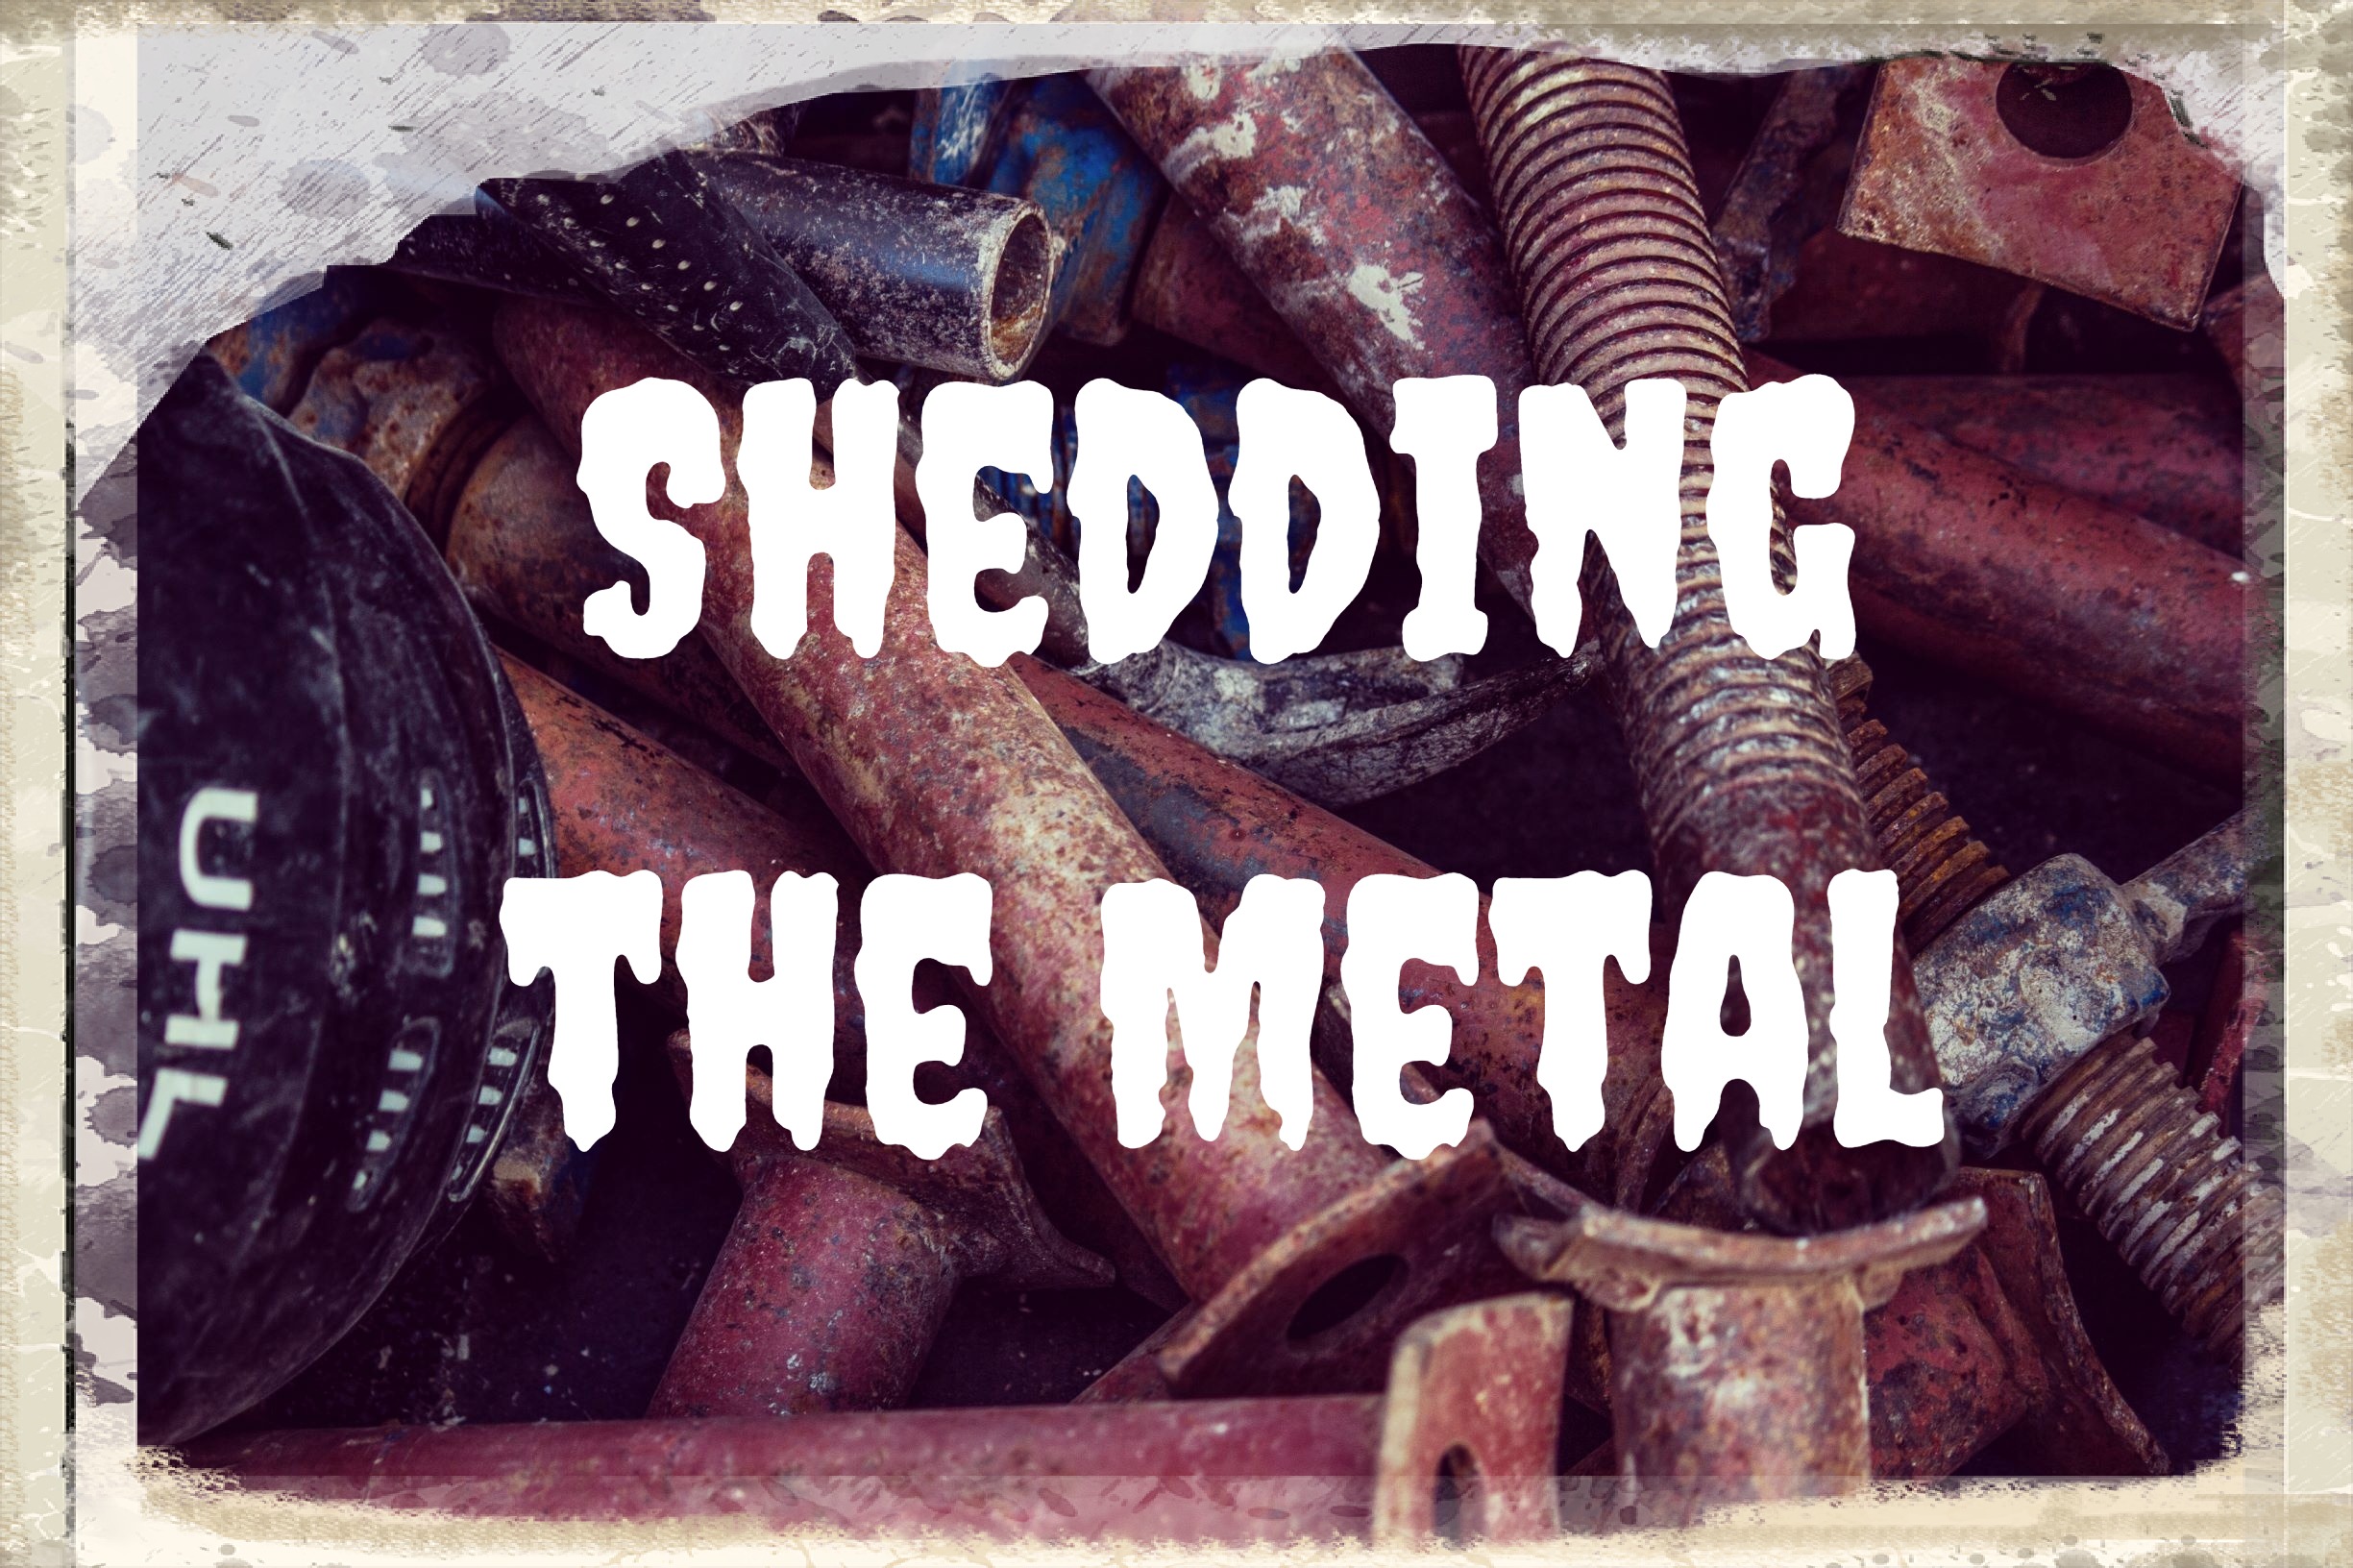 Shedding the metal